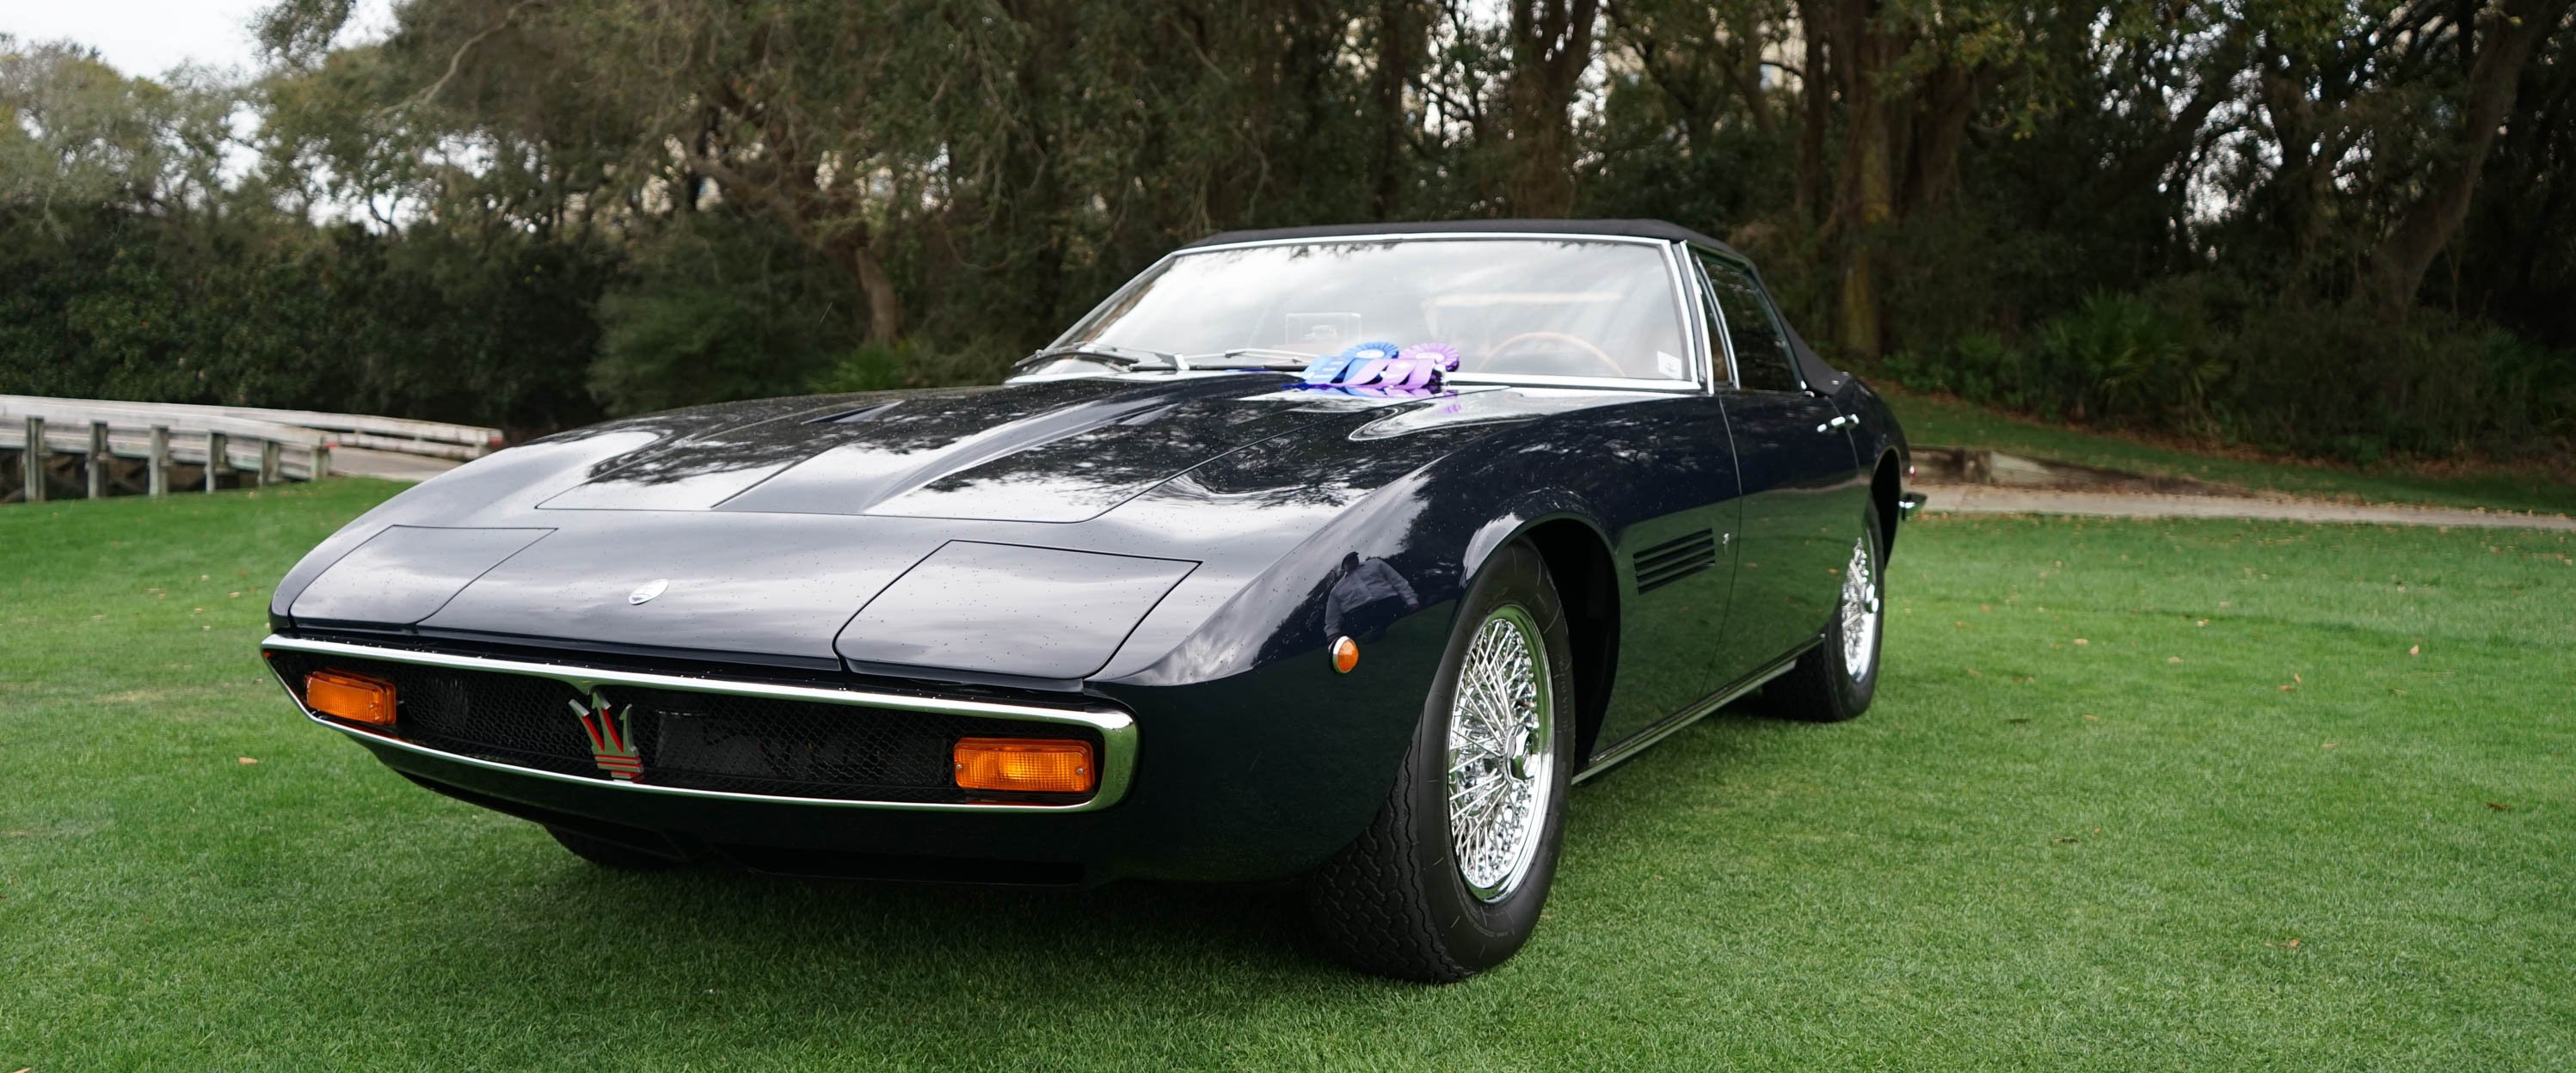 1972-Maserati-Ghibli-SS-Blue-slideshow-002@2x